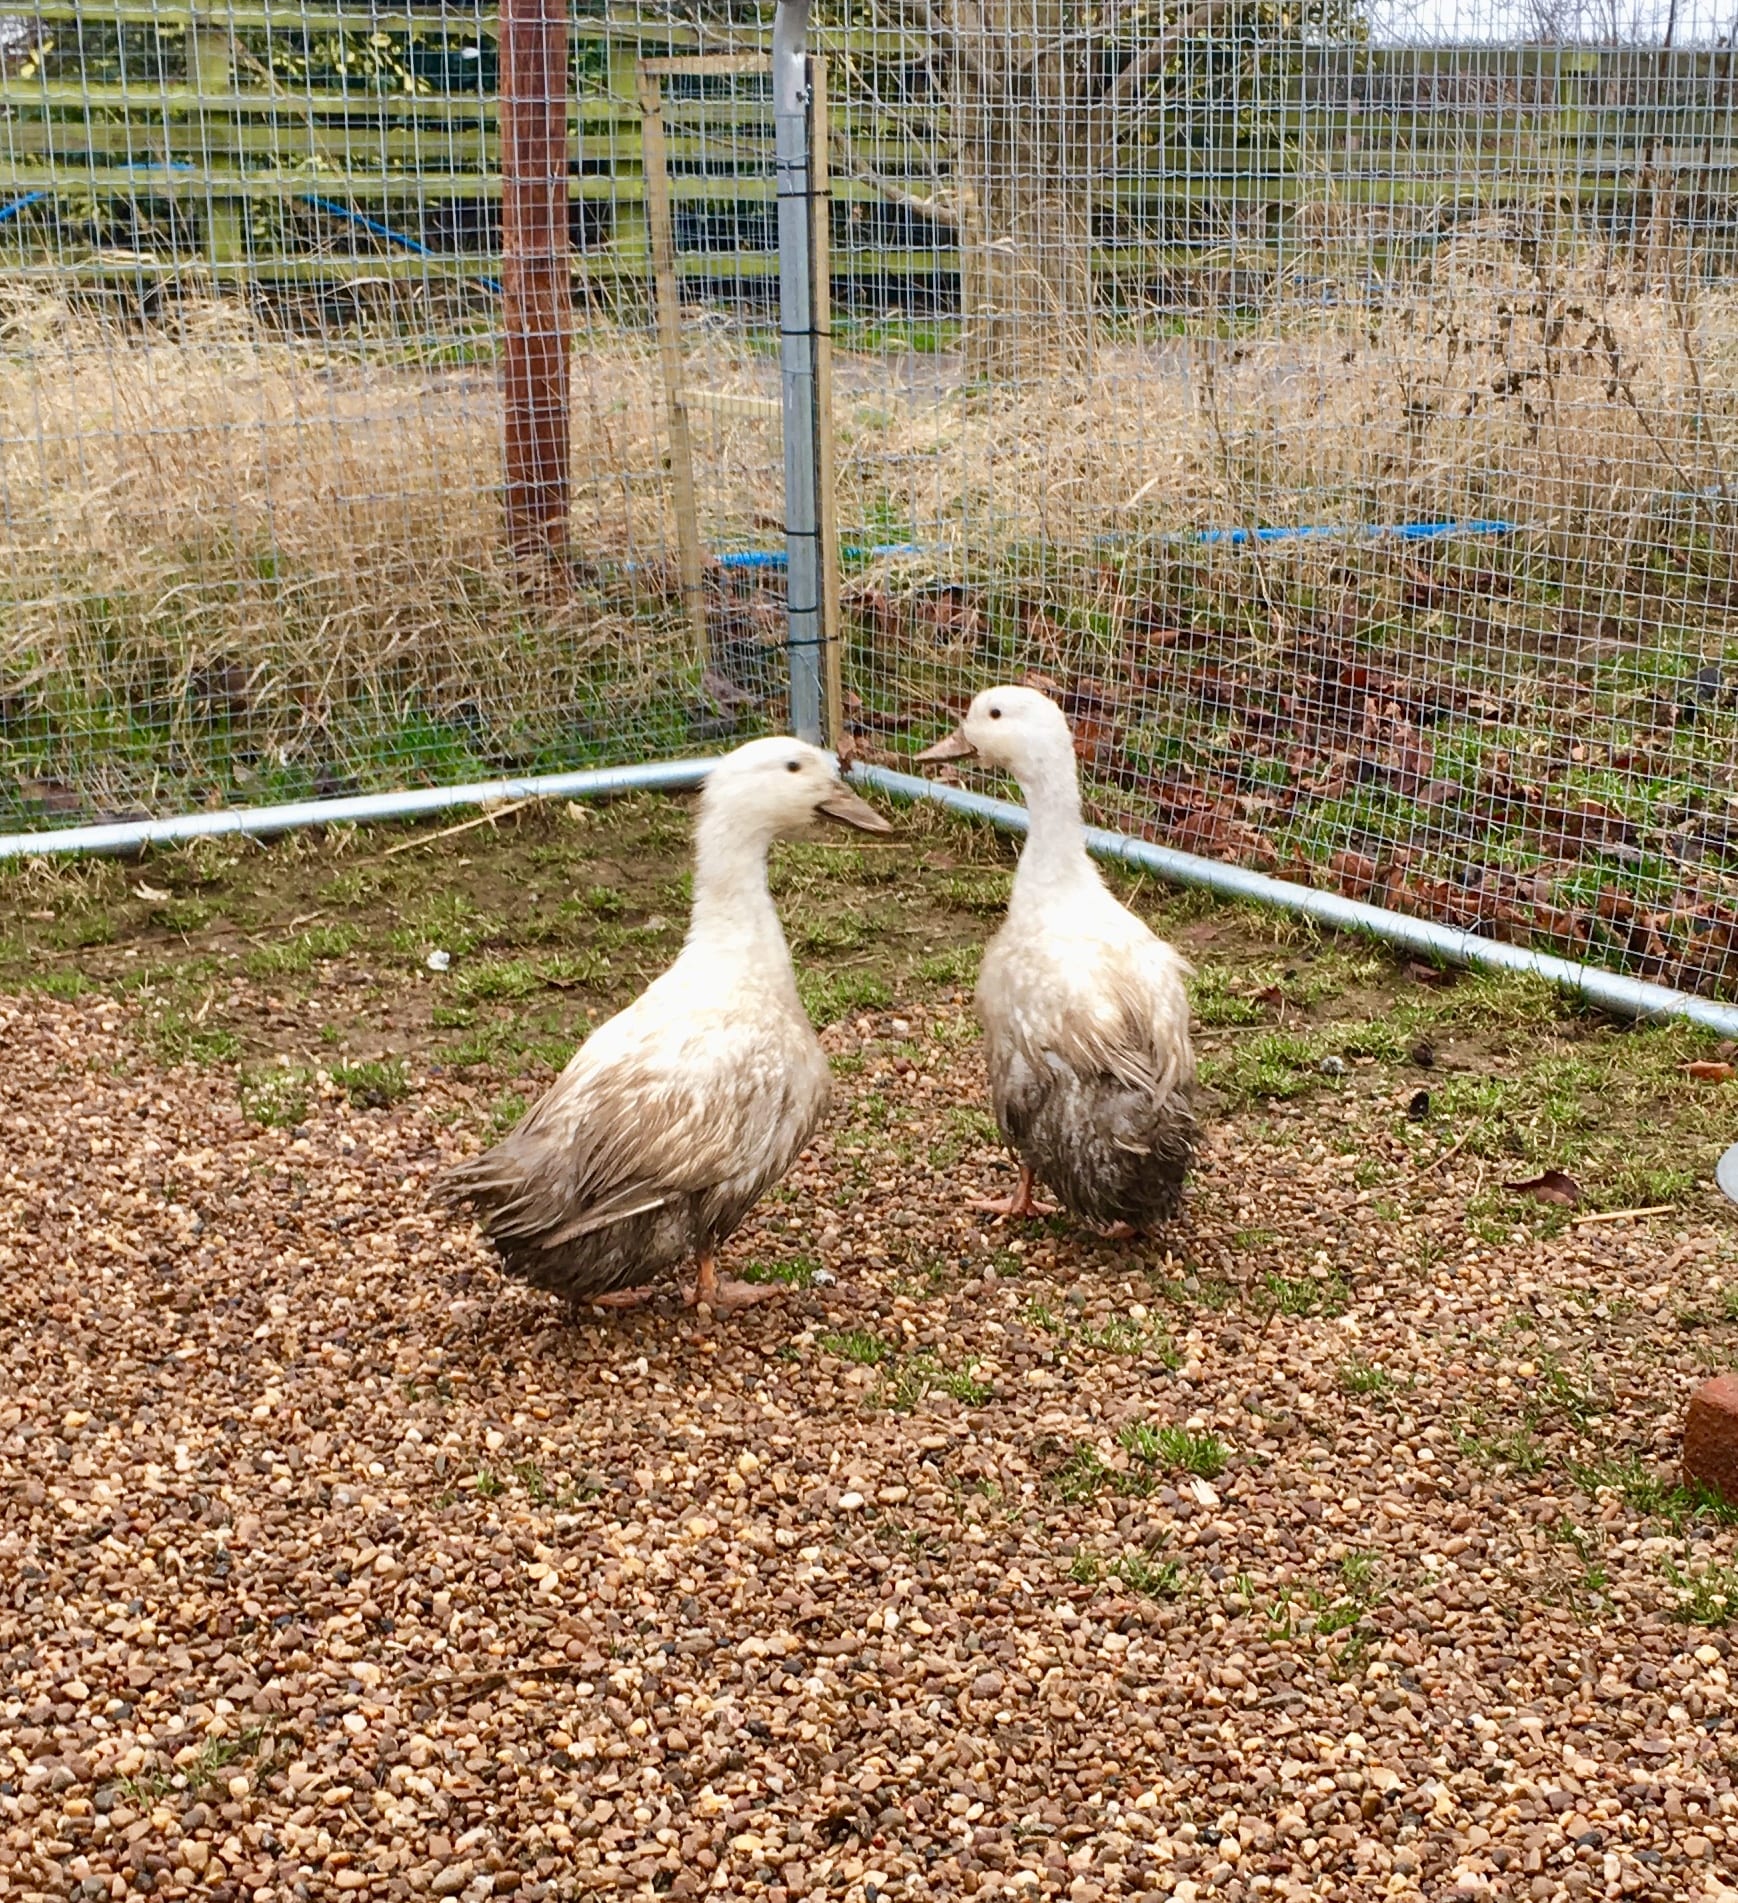 Edna & Bella, rehomed ex-commercial ducks!